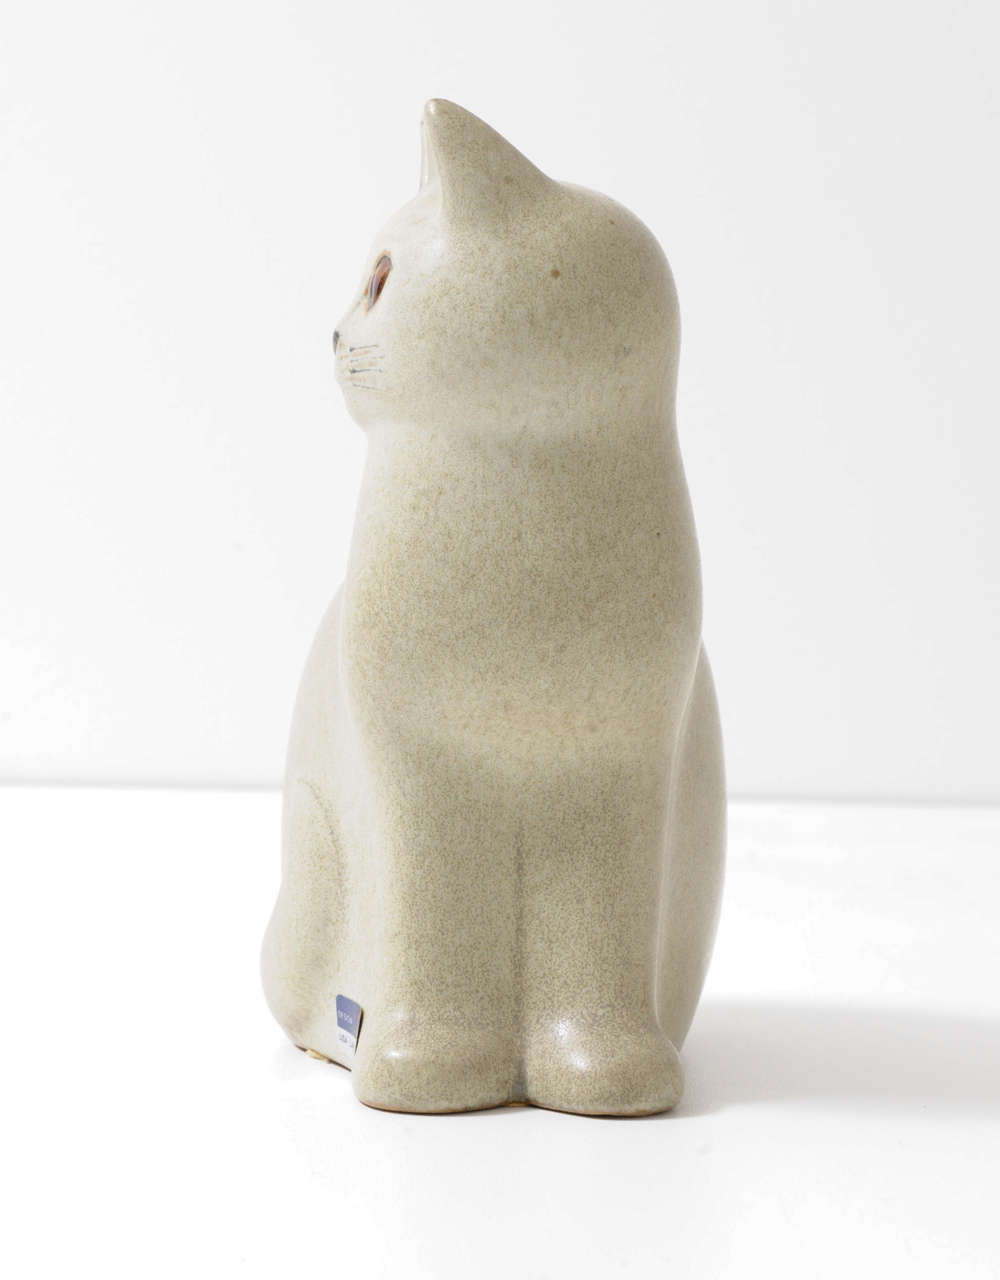 Swedish Cat designed by Lisa Larsson